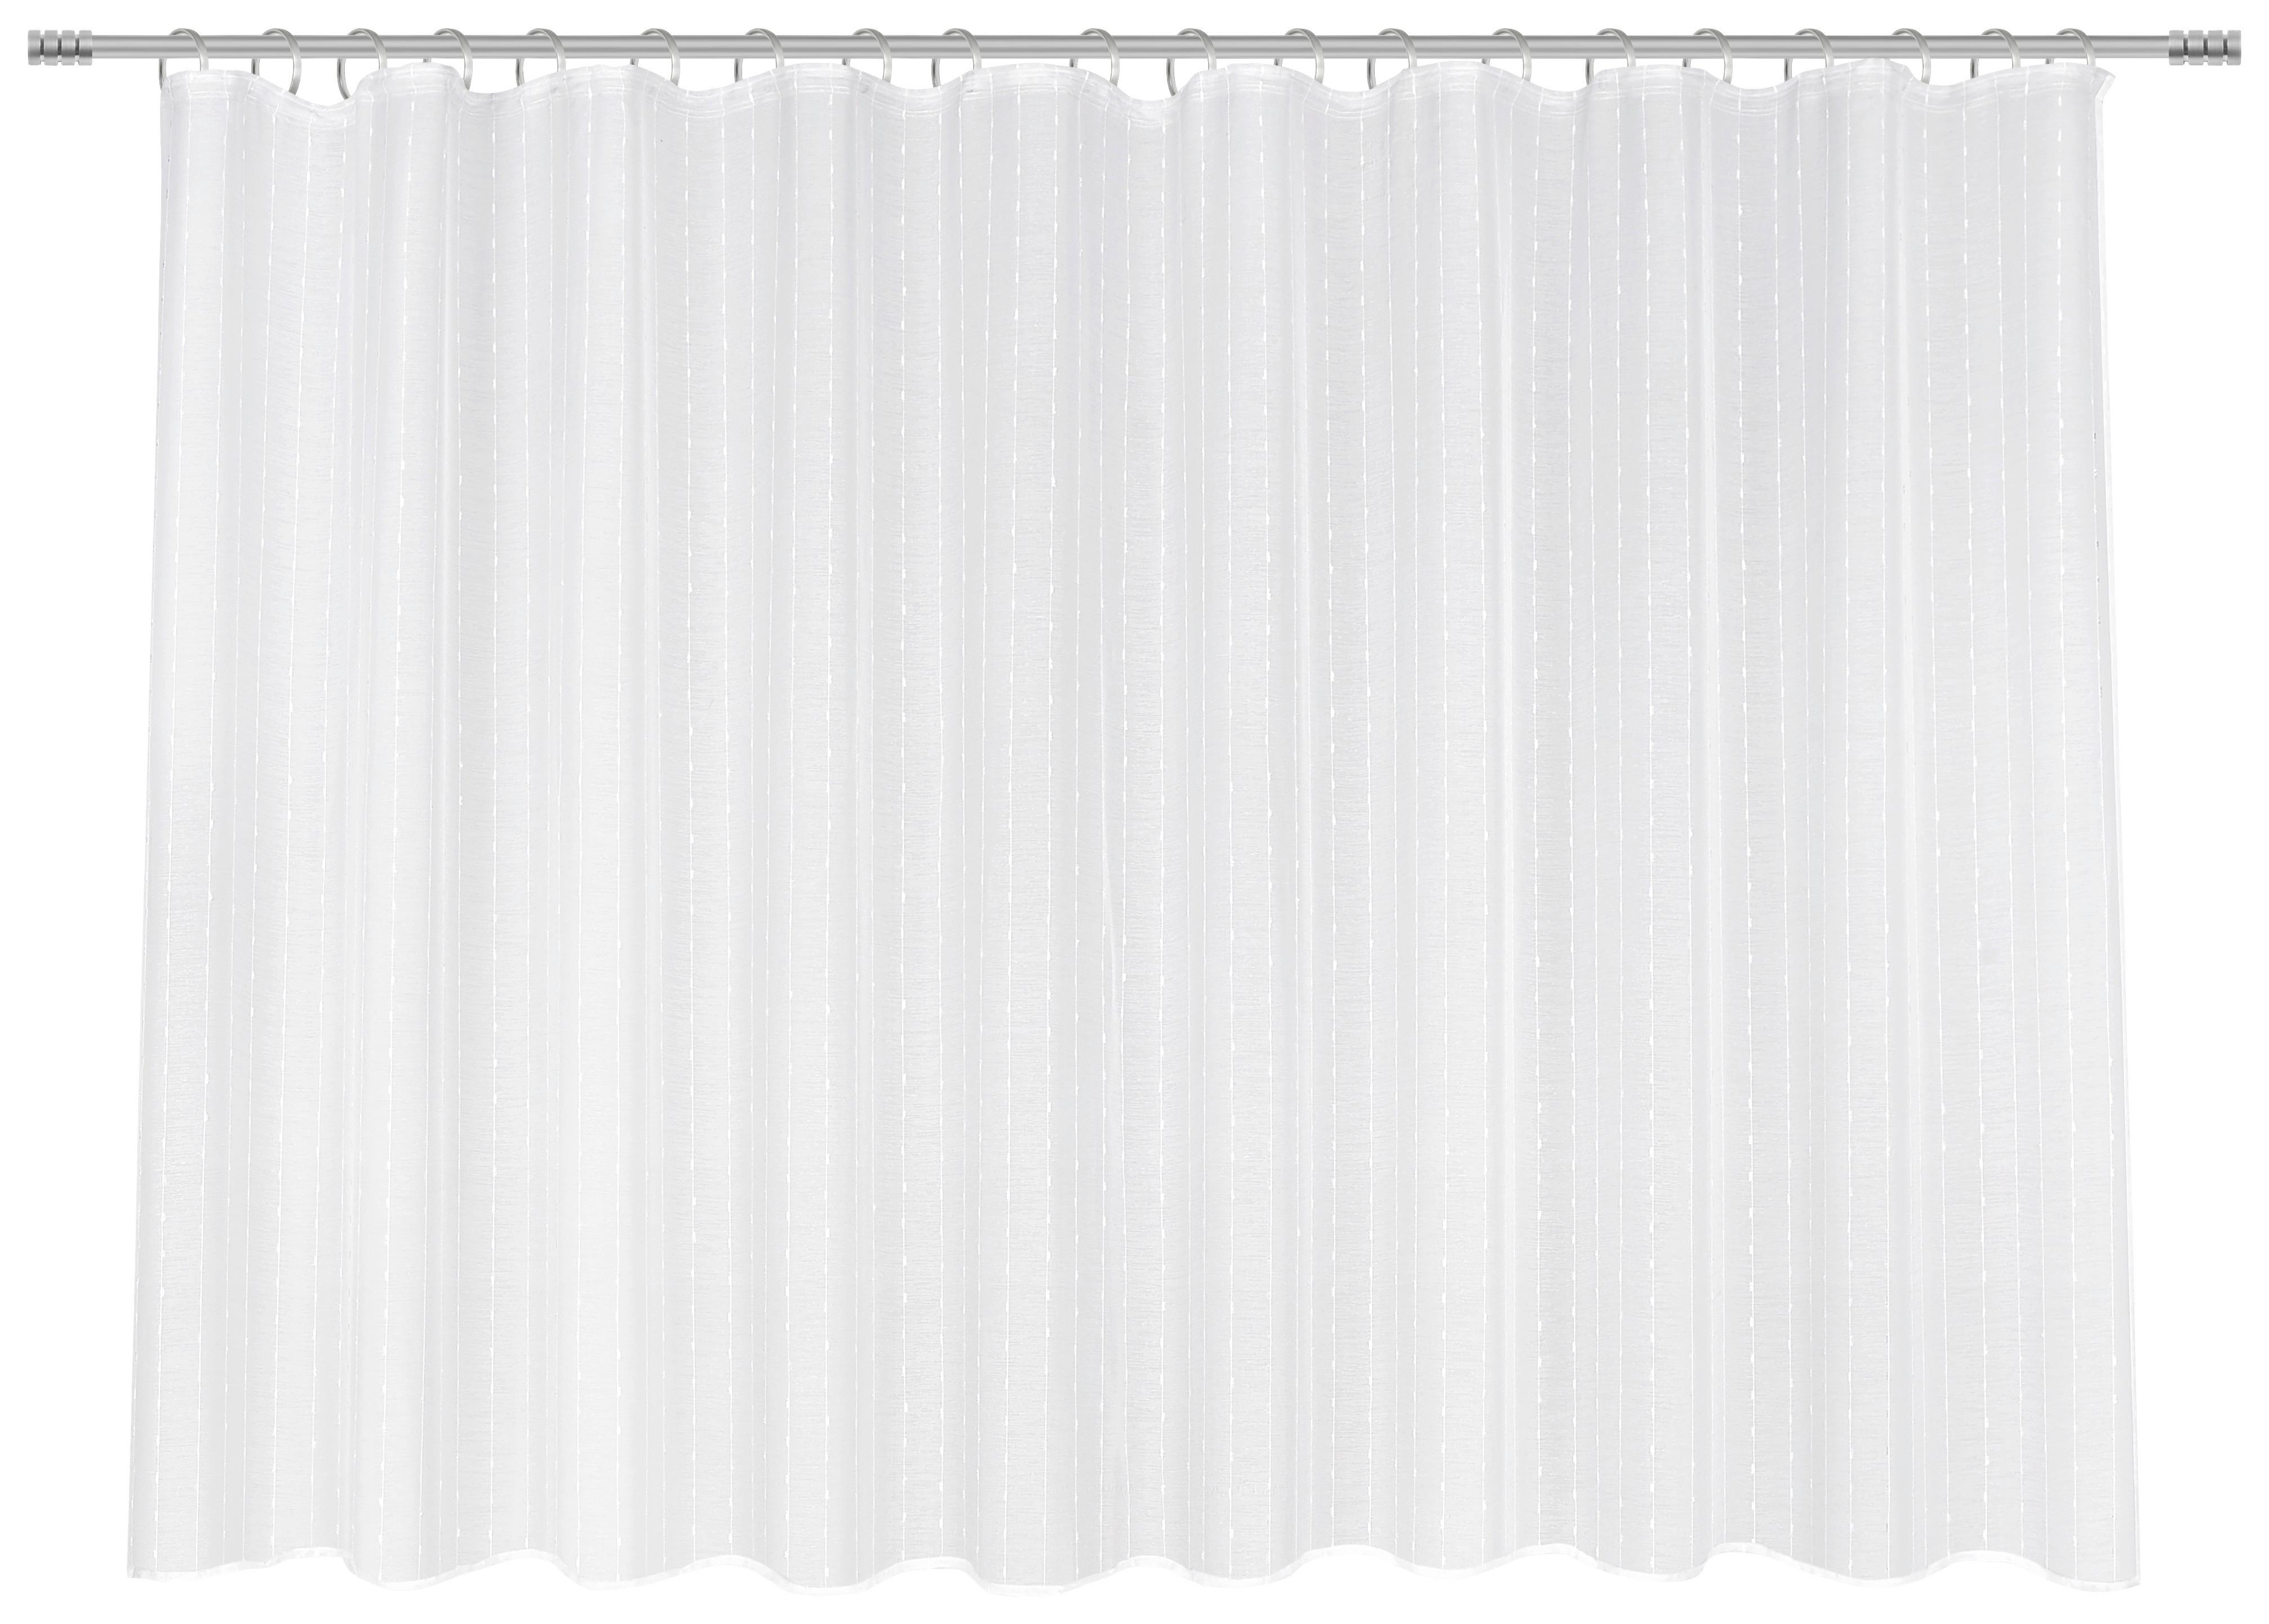 Fertigstore Lisa Store 1 ca. 300x140cm - Weiß, ROMANTIK / LANDHAUS, Textil (300/140cm) - Modern Living